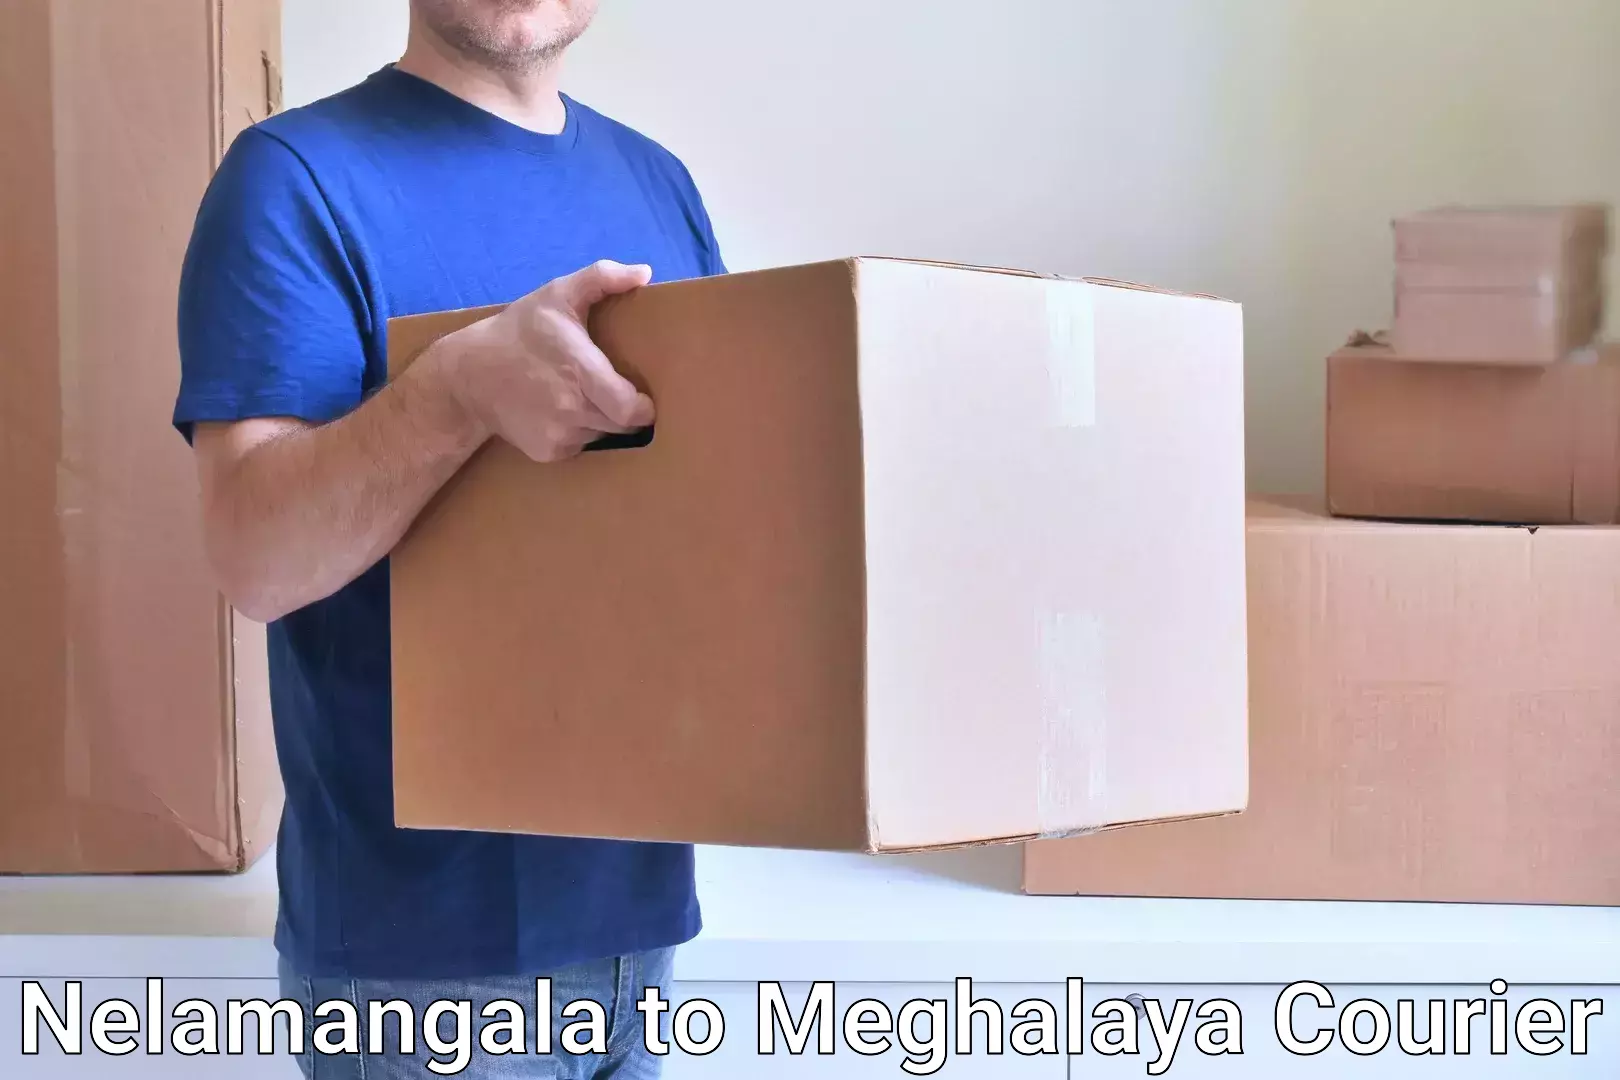 Global shipping networks Nelamangala to Shillong